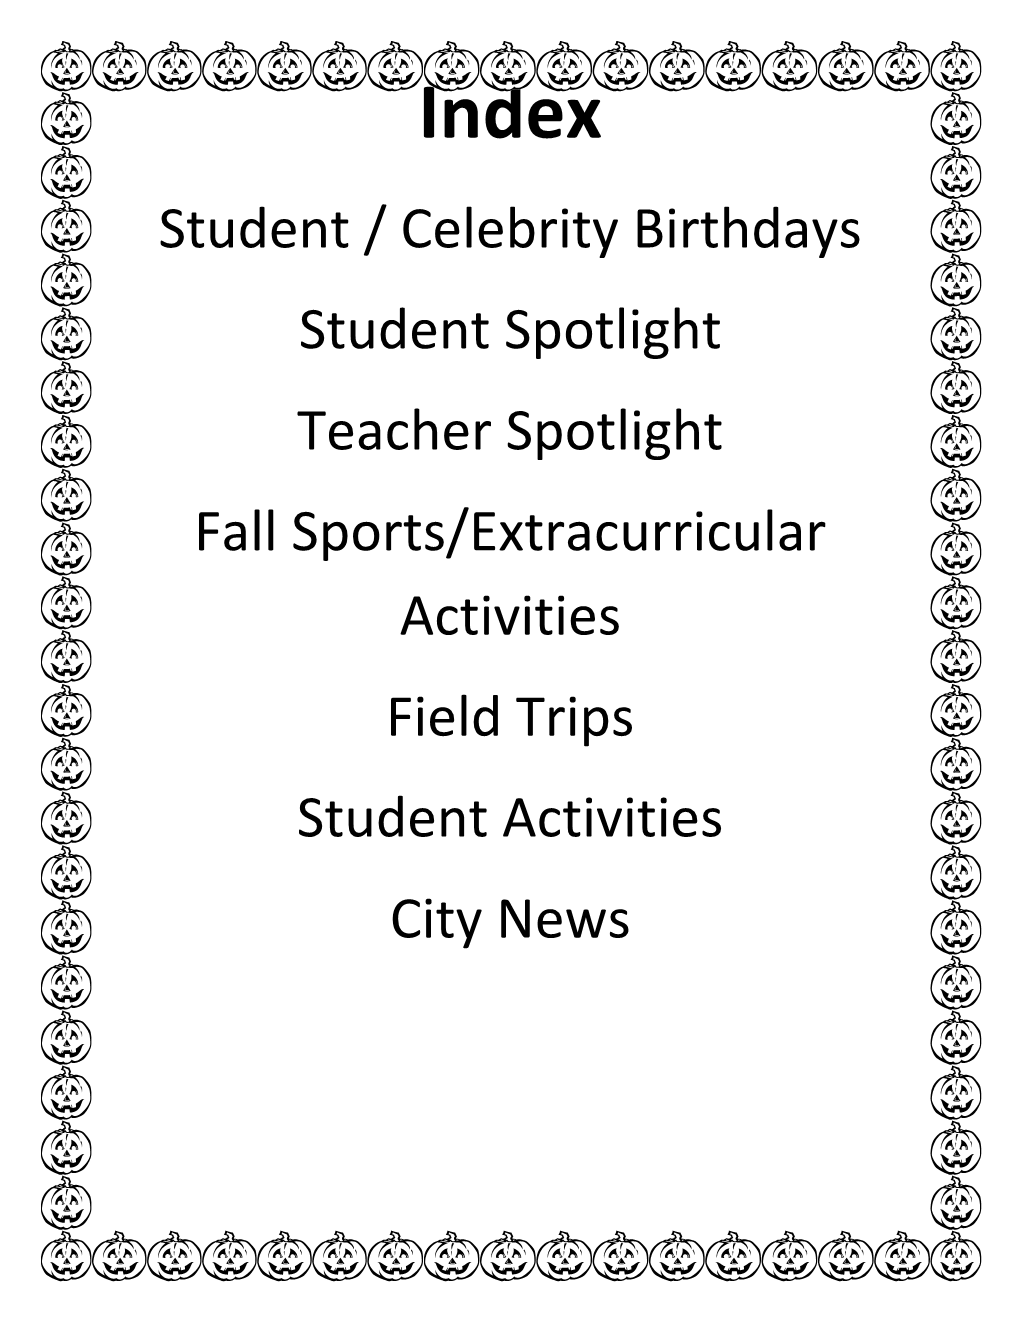 Student / Celebrity Birthdays Student Spotlight Teacher Spotlight Fall Sports/Extracurricular Activities Field Trips Student Activities City News